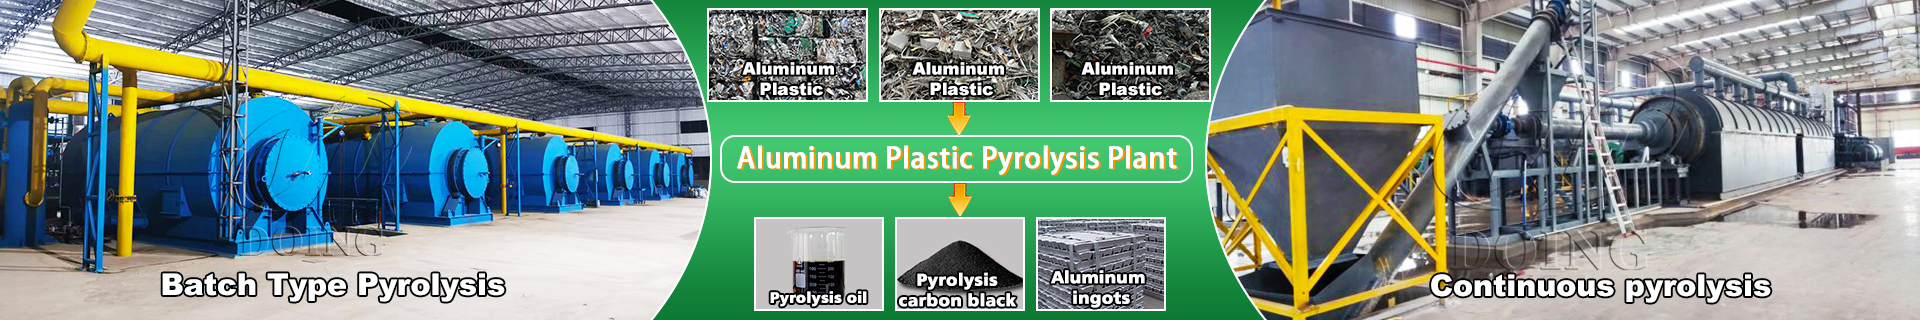 Aluminum Plastic Pyrolysis Plant